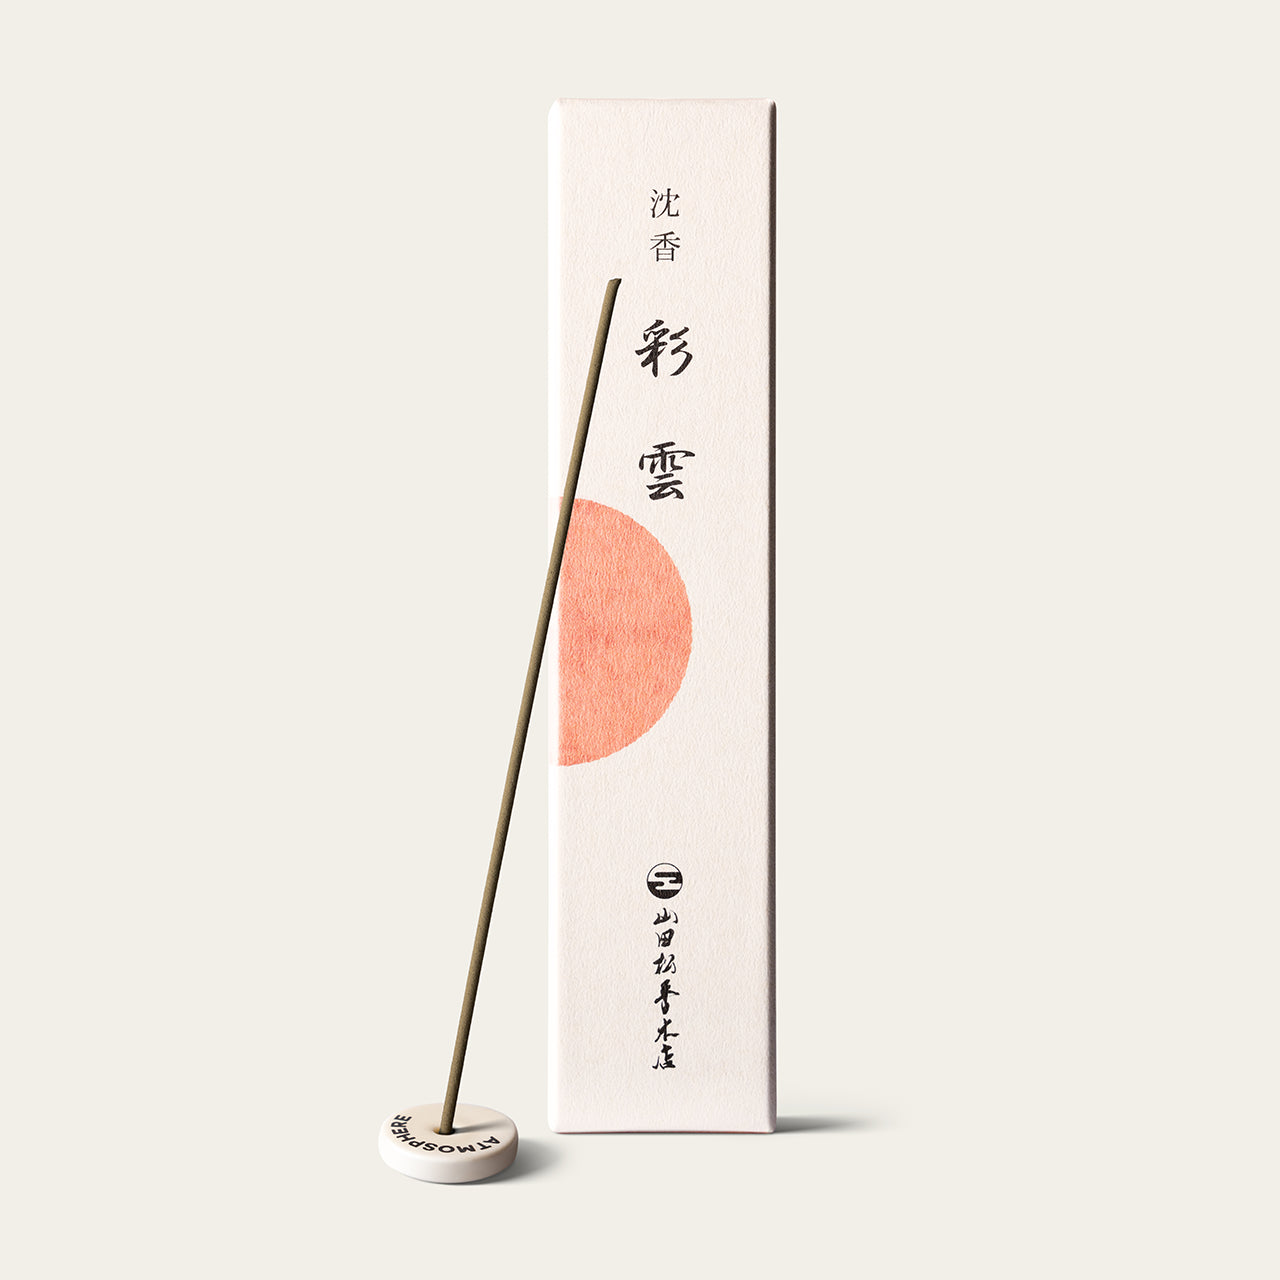 Yamadamatsu Premium Iridescent Clouds Saiun Japanese incense sticks (75 sticks) with Atmosphere ceramic incense holder